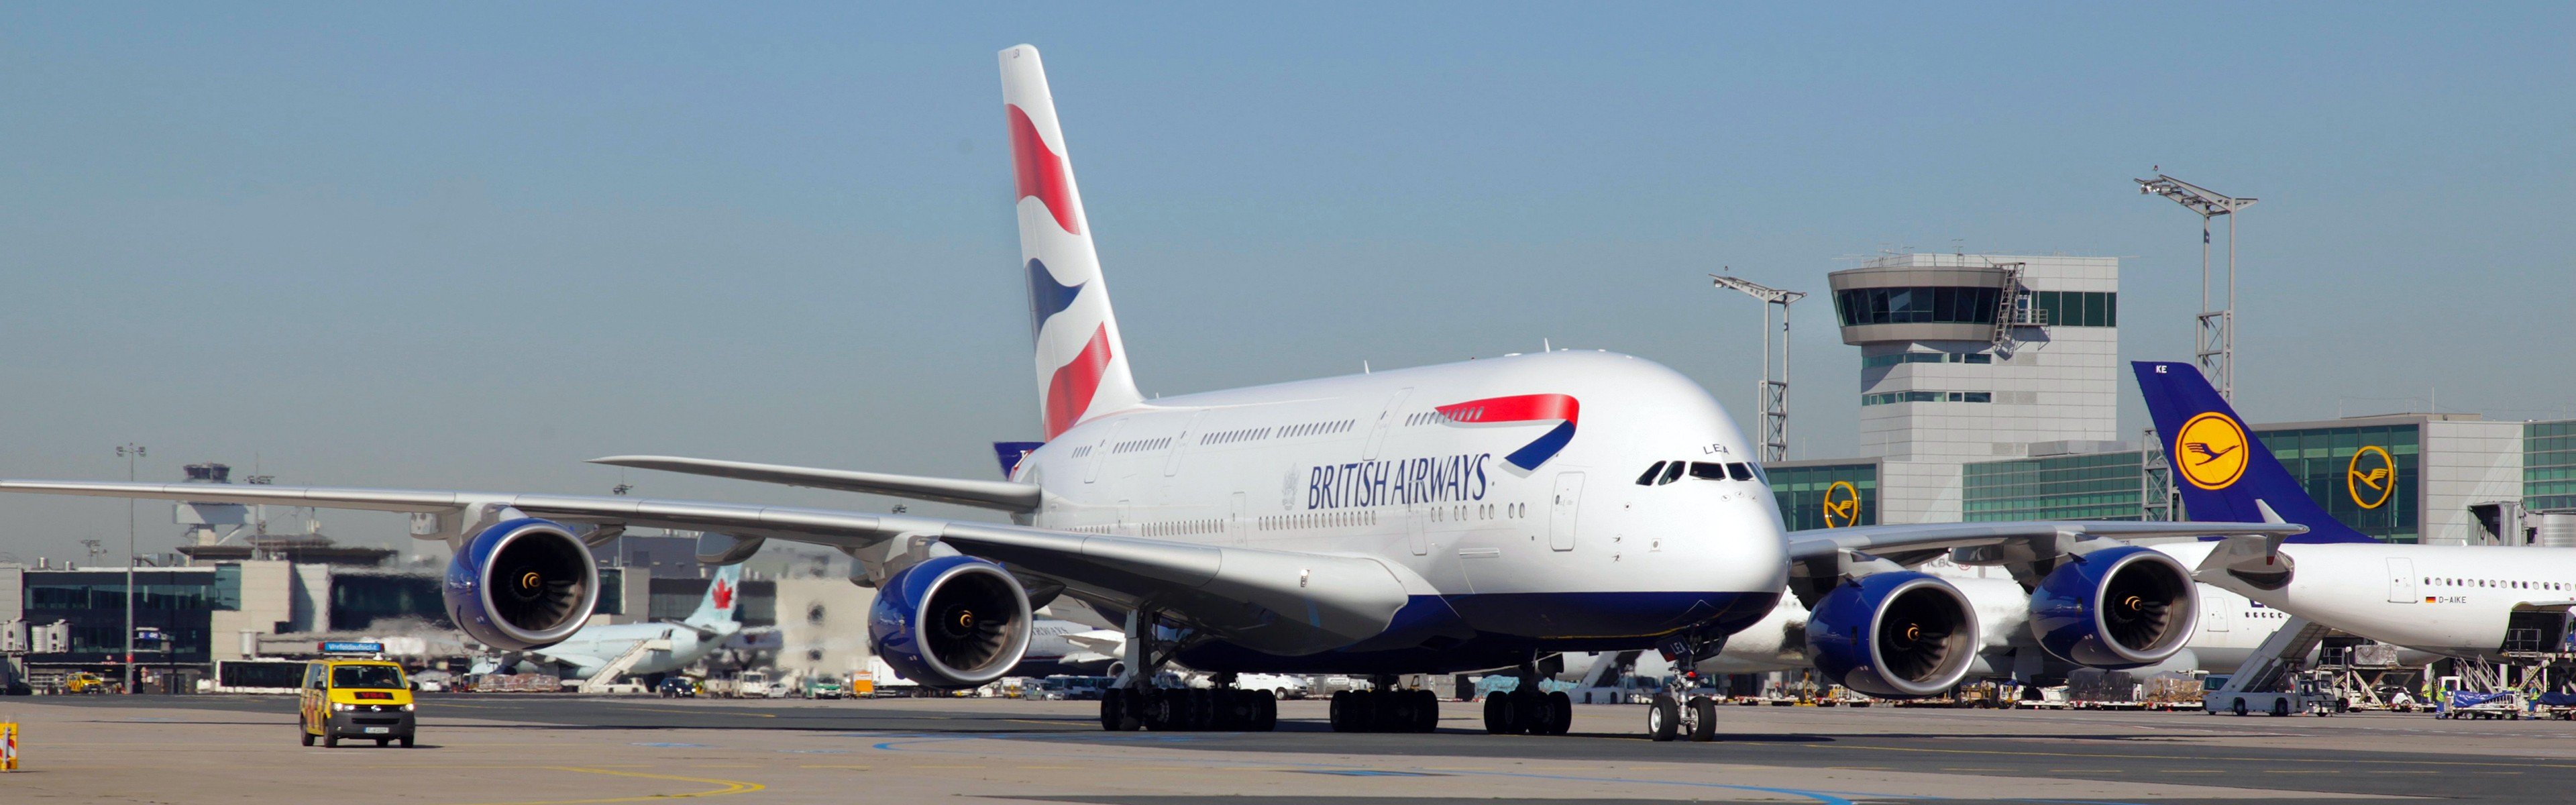 British Airways London To Frankfurt - HD Wallpaper 